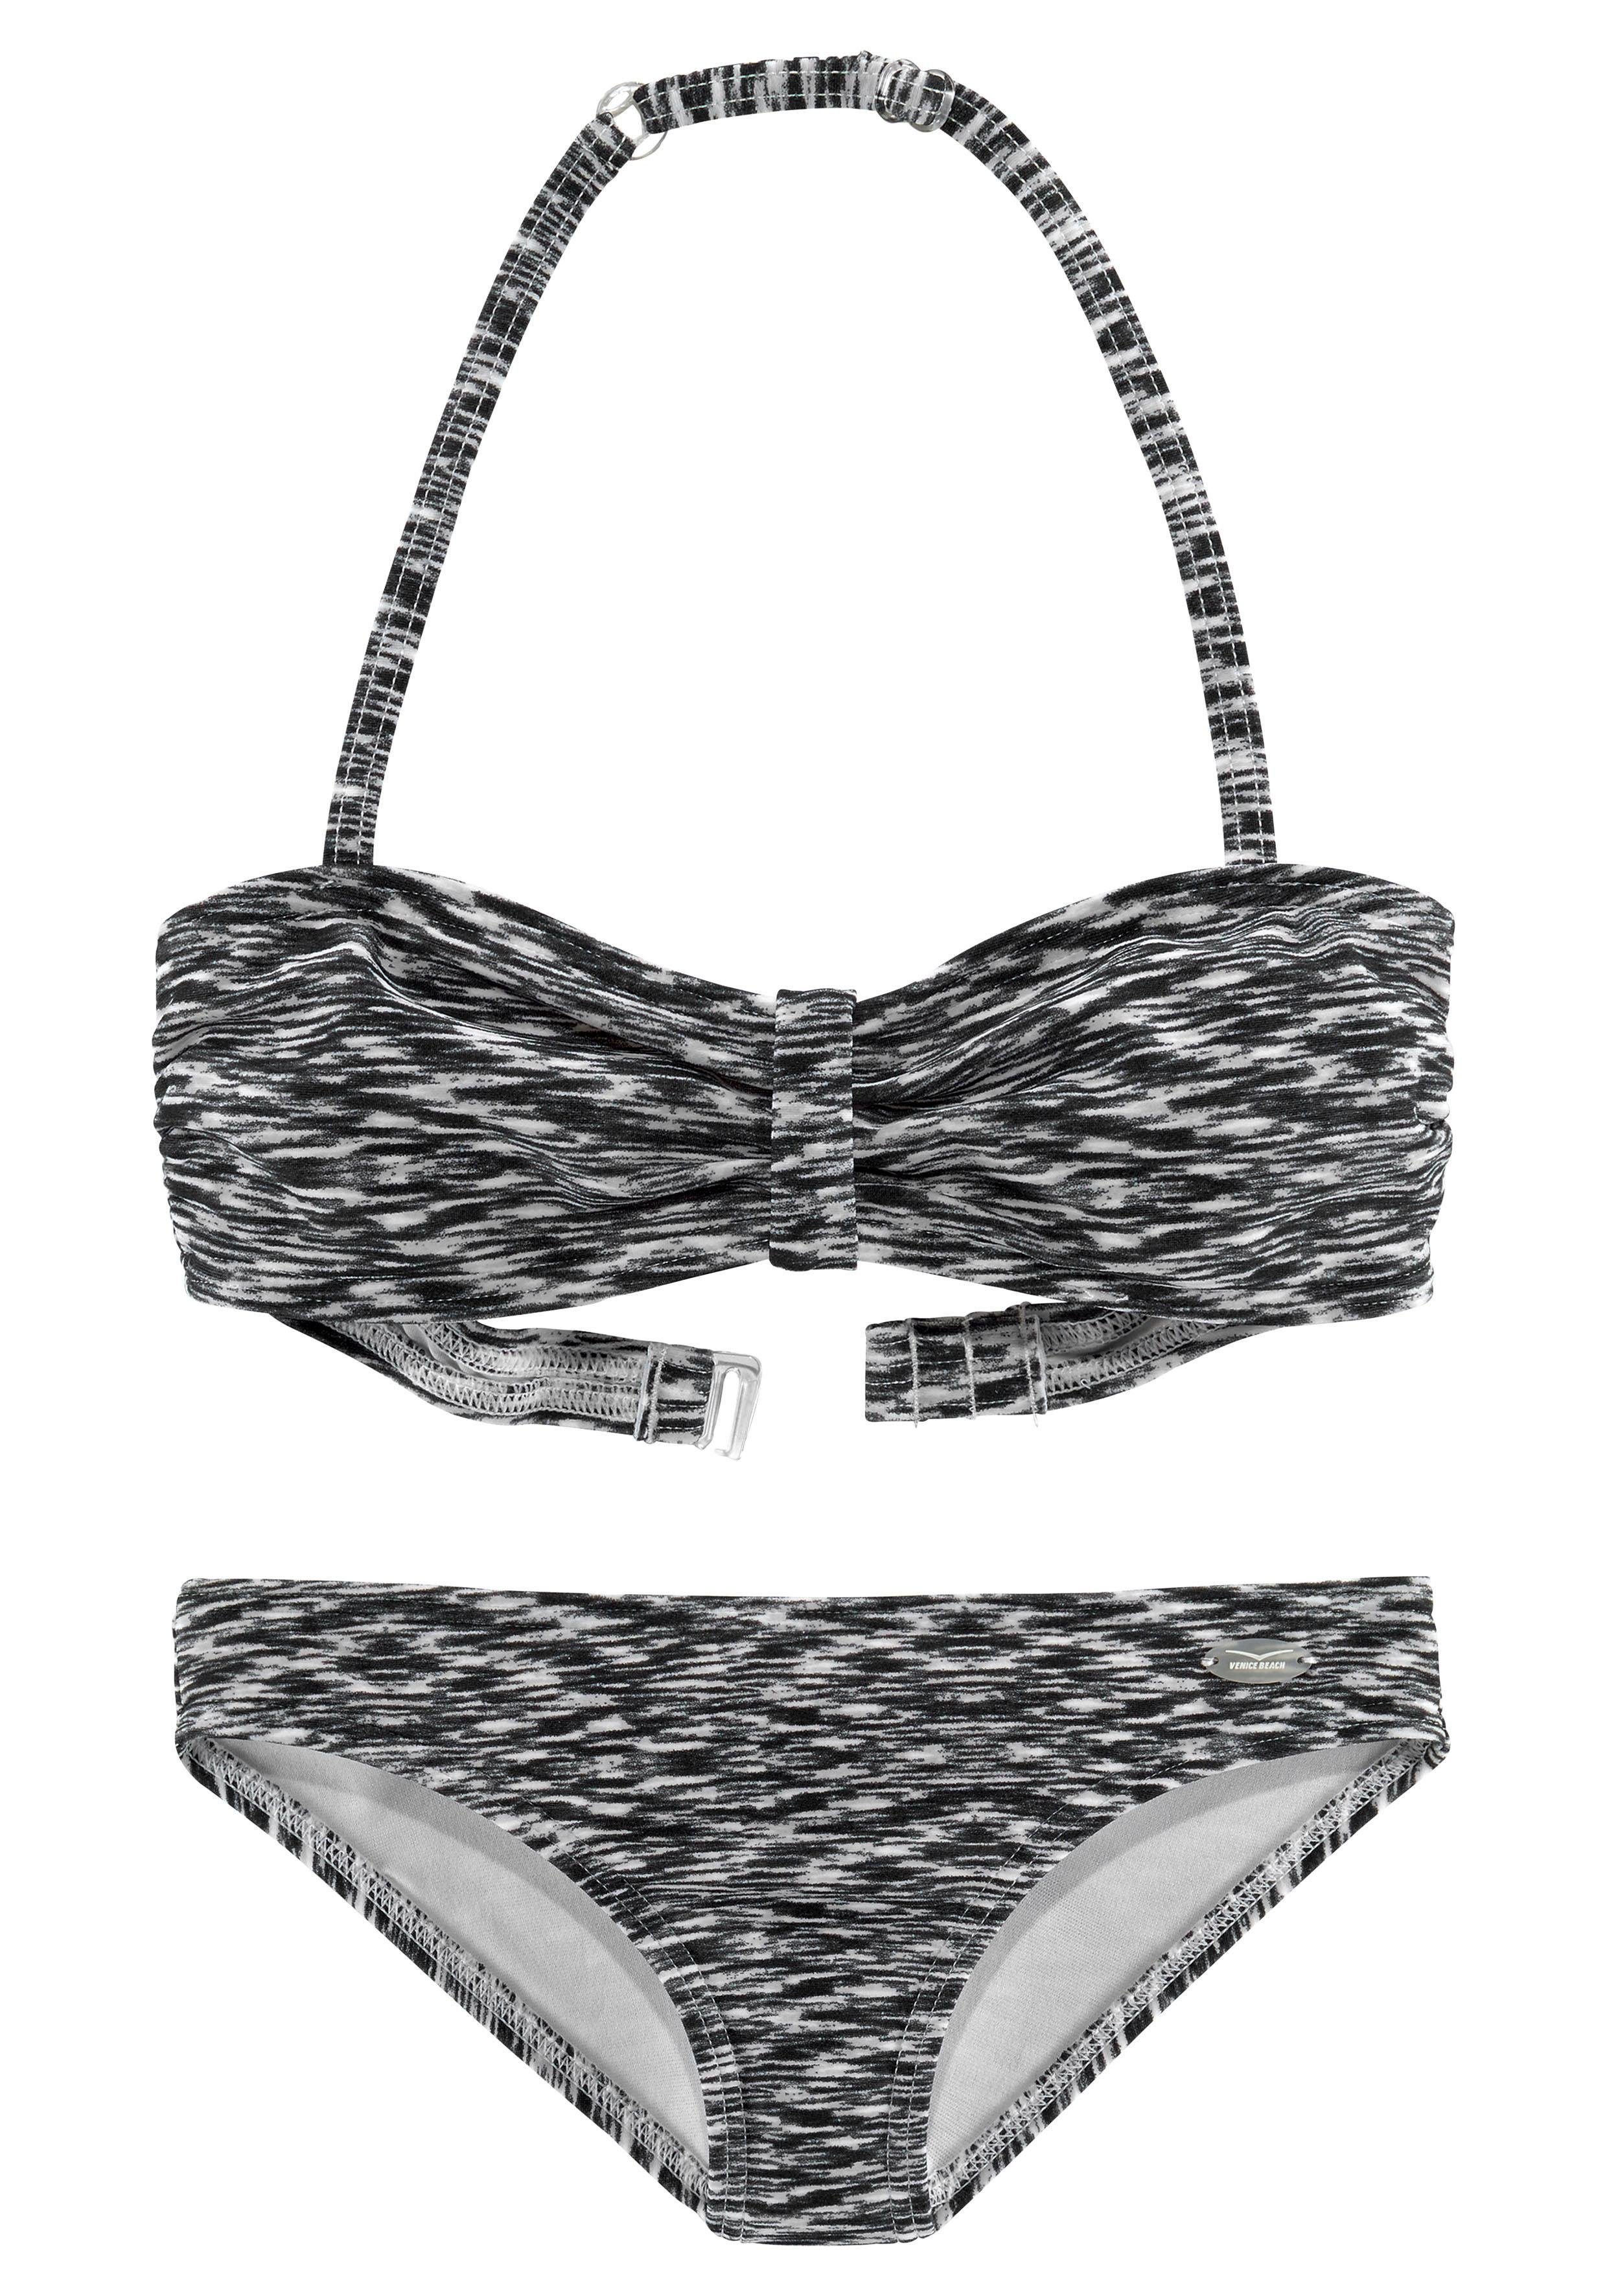 Venice Beach Melange-Optik in Bandeau-Bikini schwarz-weiß